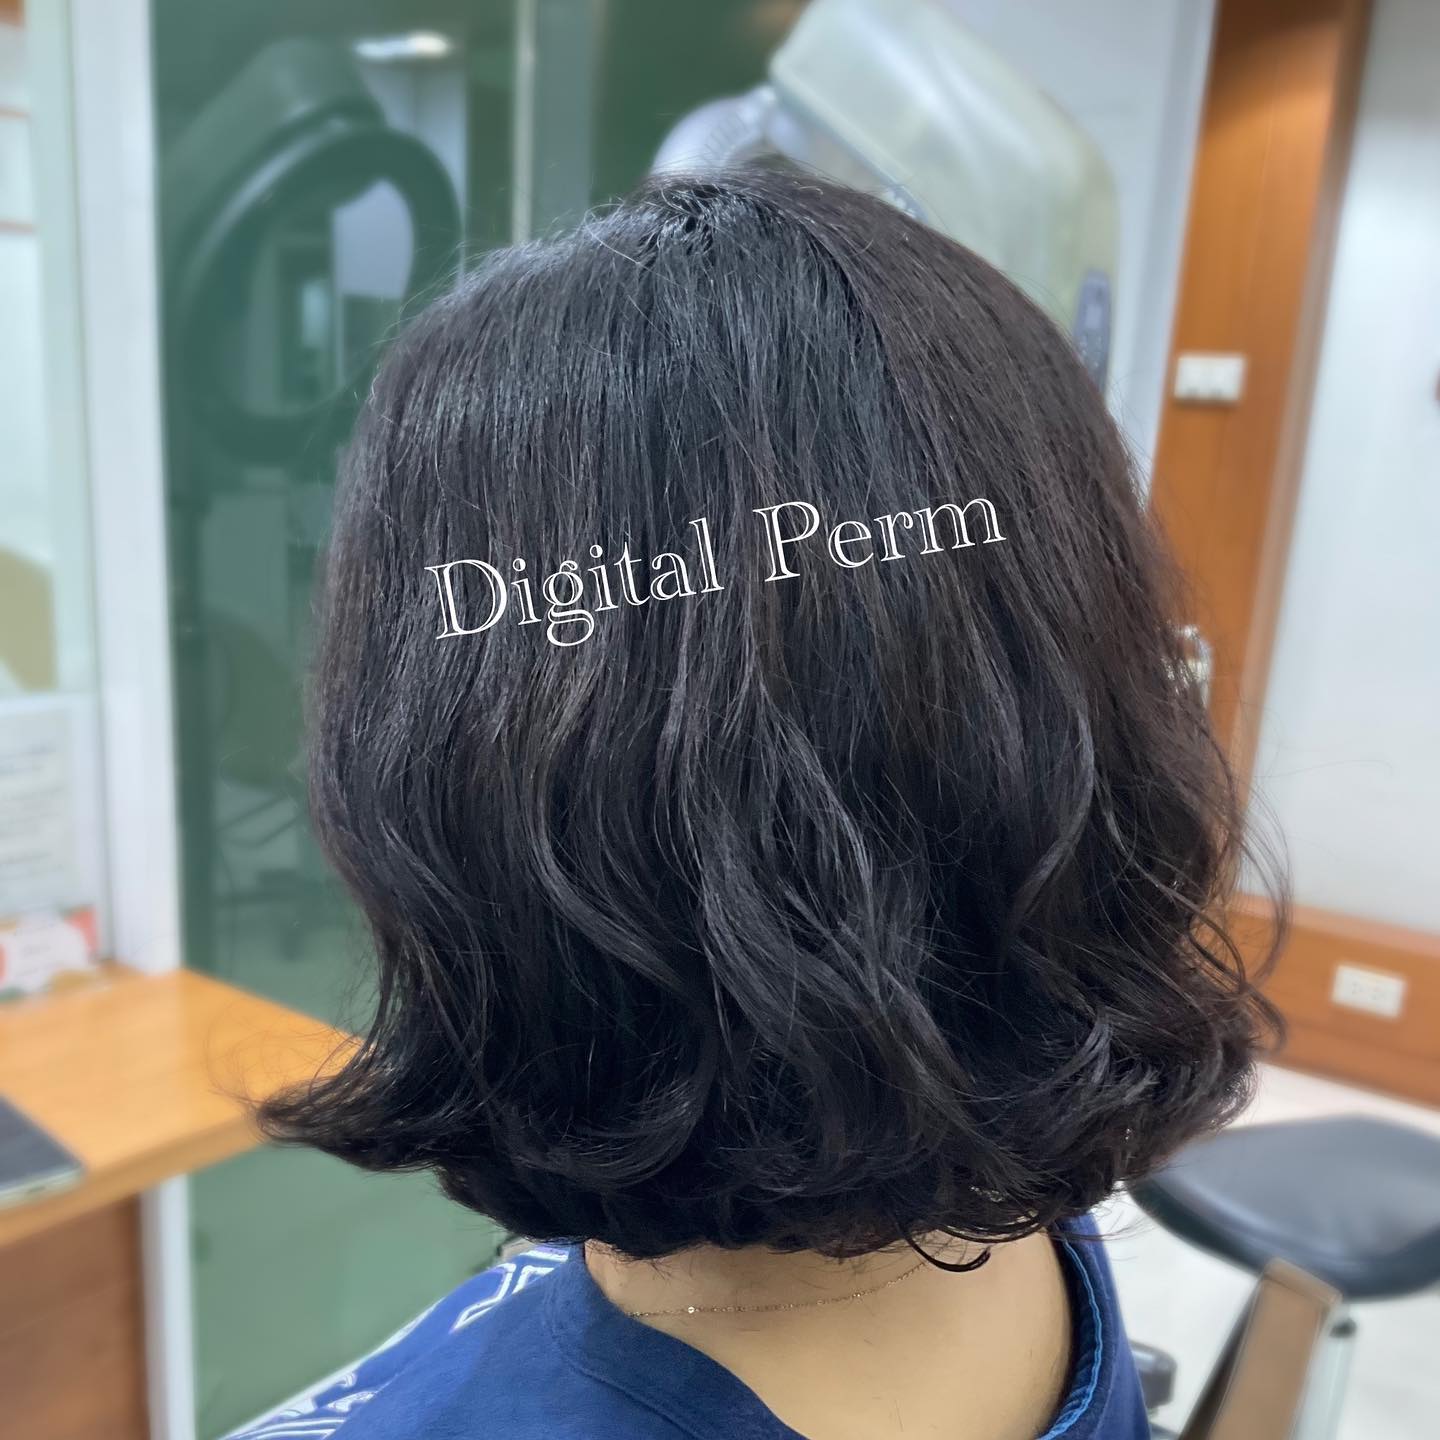 Digital perm + cut + soda  3300B+  　Easy to style at home🥰  ＊Please make a reservation.
…………………………
ร้าน Hair Room Sora 299/7 ชั้น1, Sukhumvit Living Town, ซอยสุขุมวิท21(อโศก)
โทรศัพท์ : 02-169-1622
ร้านเปิดทุกวัน 10.00-18:40น.  ปิดวันจันทร์ชั่วคราว
#Hairroomsora #hairroomsorabangkok #Hairsalon #Hairstyle #Sukhumvitlivingtown #sukhumvit21 #Japanesesalon #DigitalPerm #デジパ #ヘアールームソラ #fashioncolor #ร้านซาลอนญี่ปุ่น #ซาลอน #ทำผมรับปริญญา #ทำผมออกงาน #รับทำผม #ดัดดิจิตอล #ยืดผม #ย้อมผม